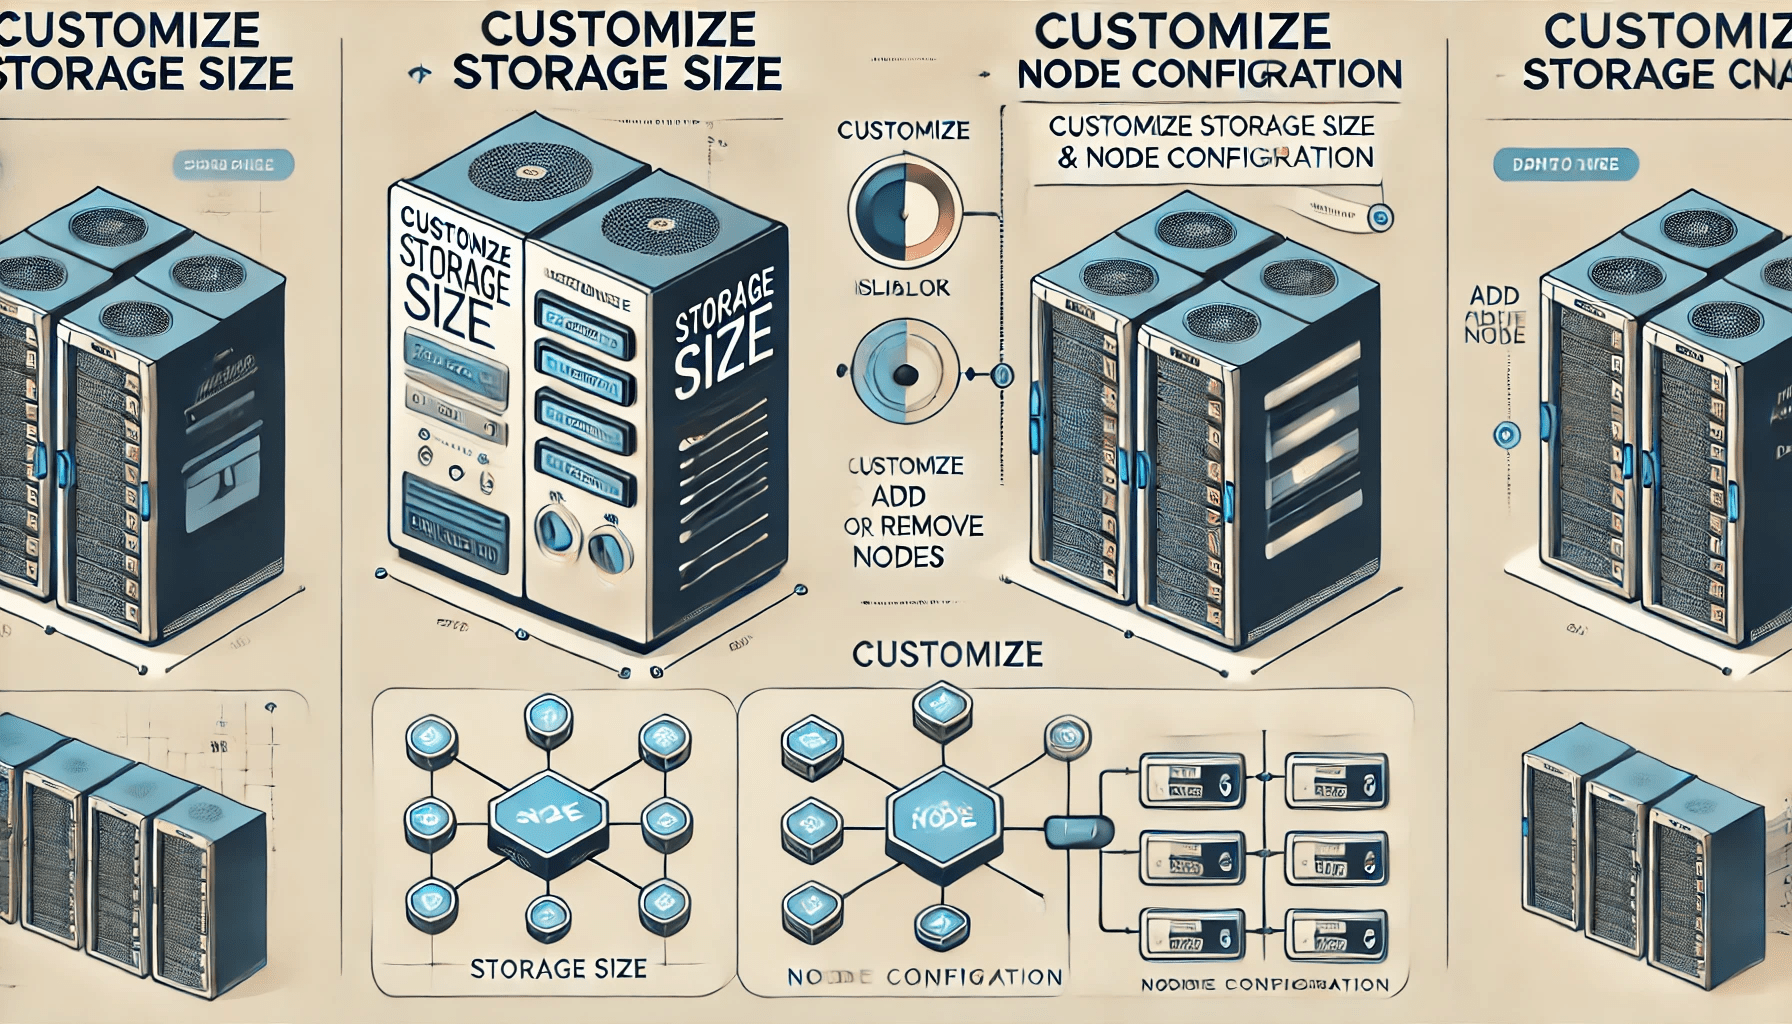 Customize Storage size and node